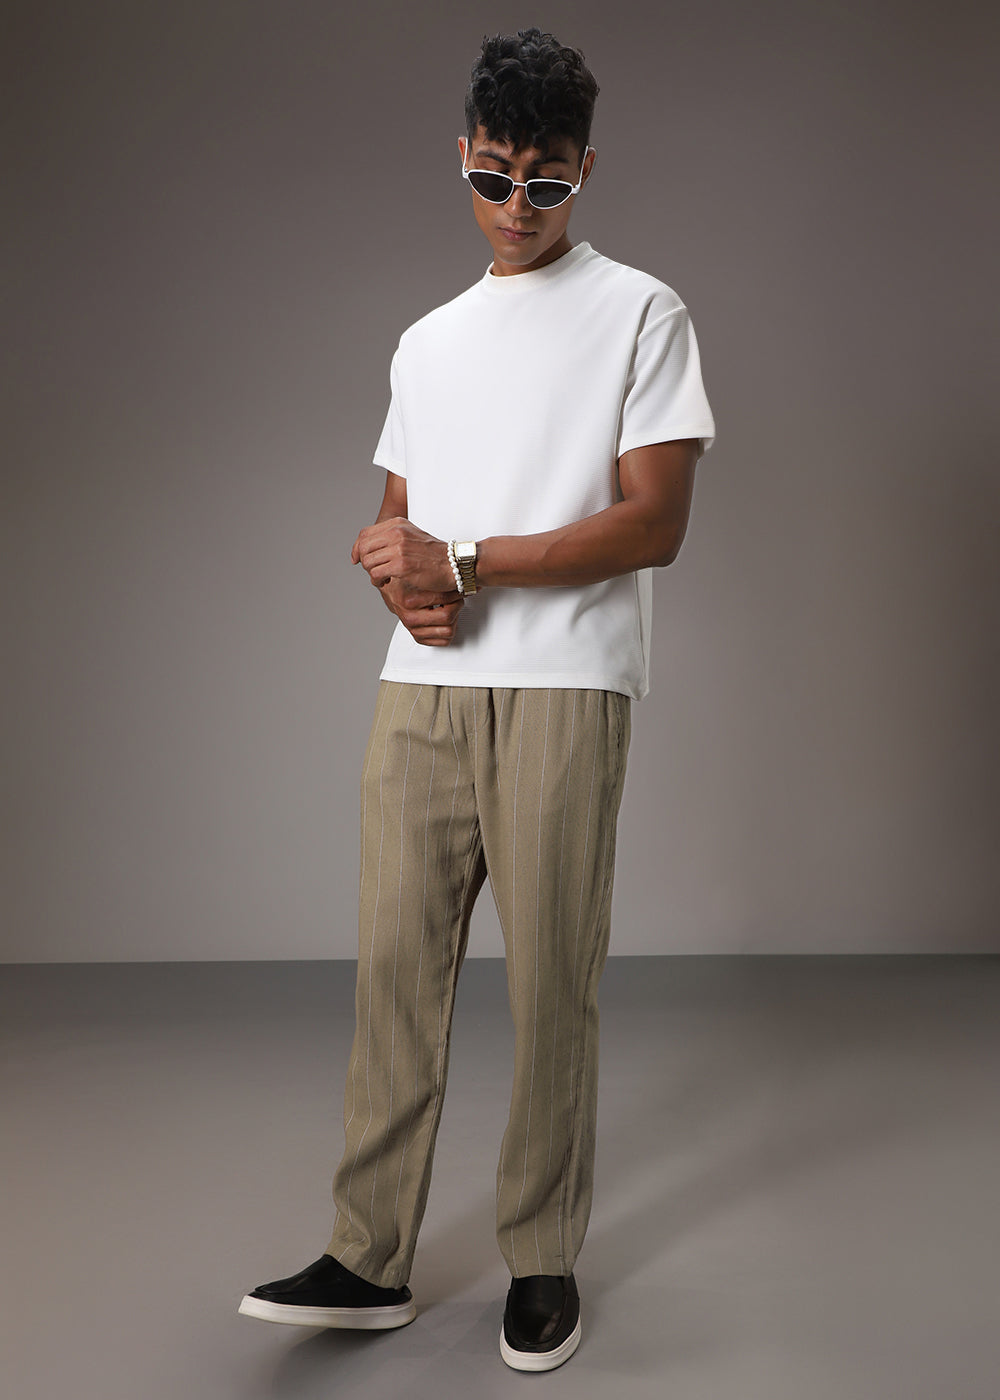 Brown Striped Linen Pant